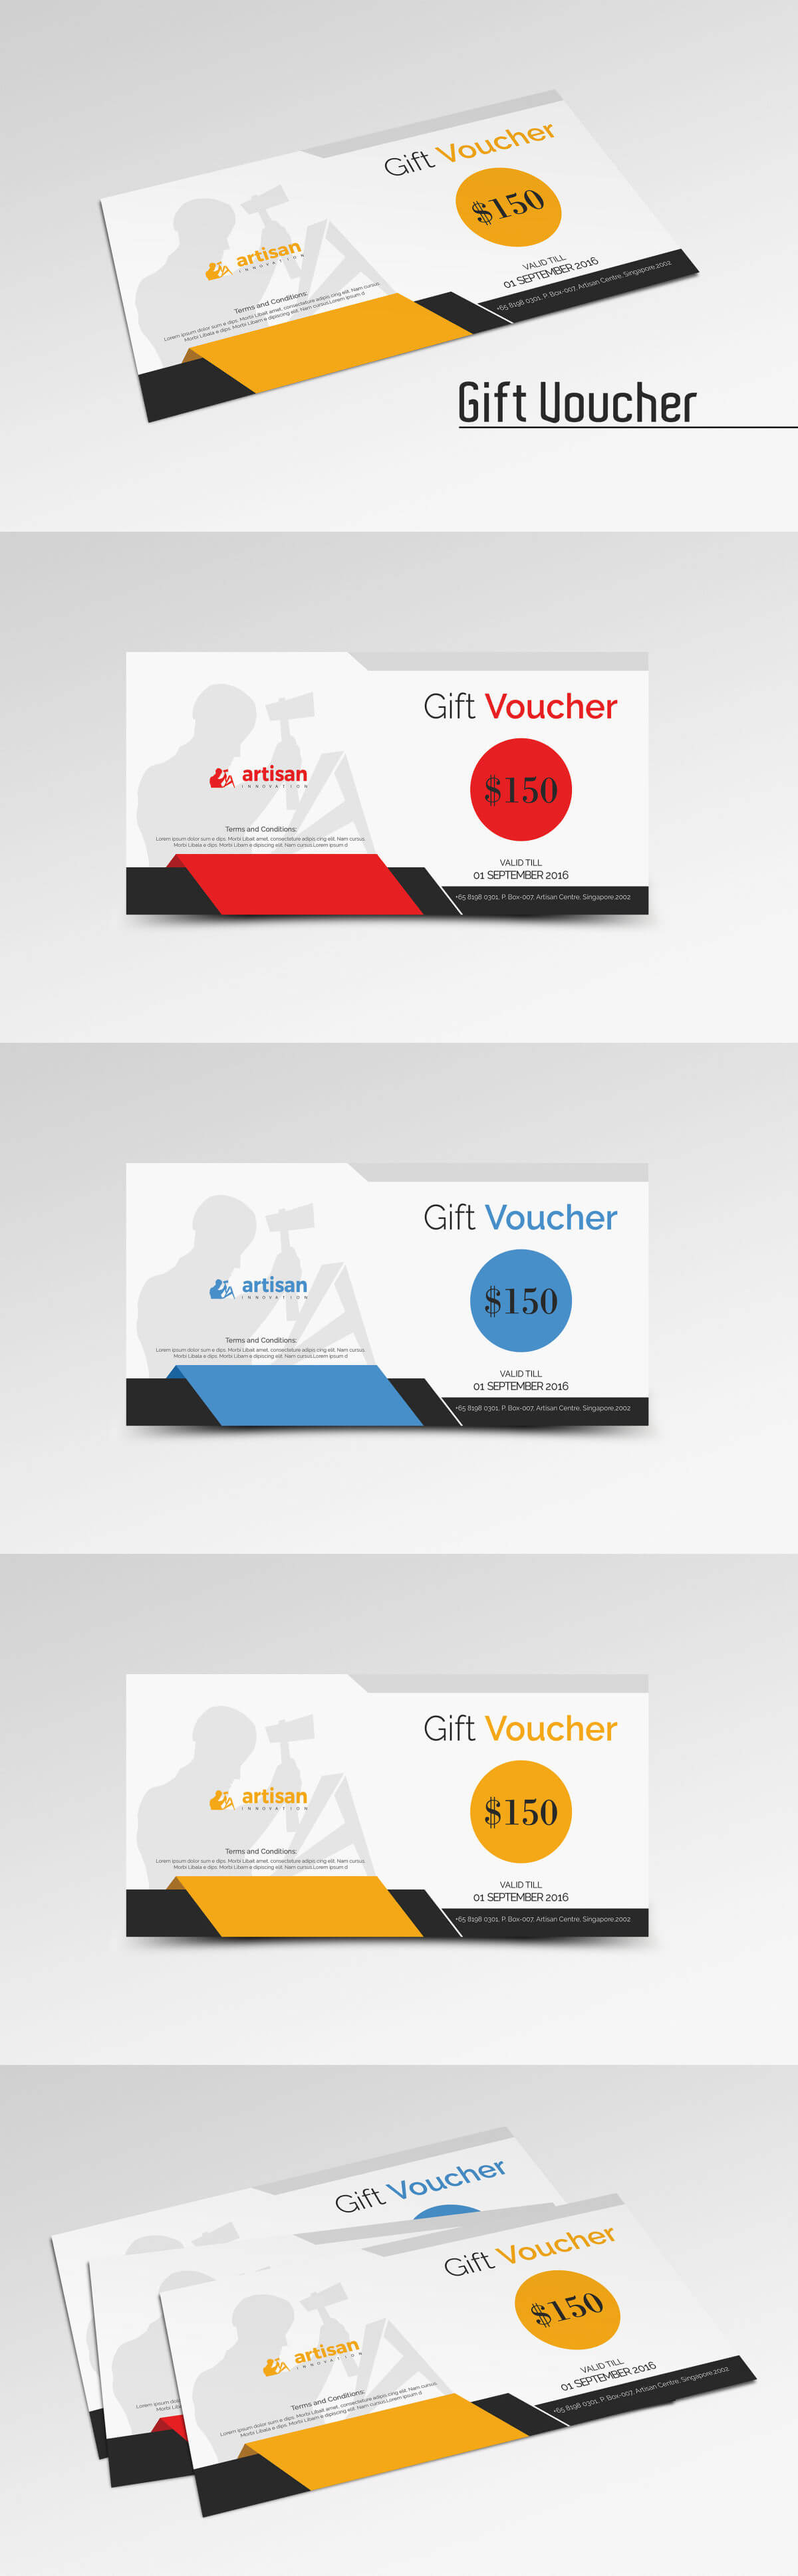 Gift Voucher Template Ai, Eps, Psd | Gift Voucher Design For Gift Card Template Illustrator